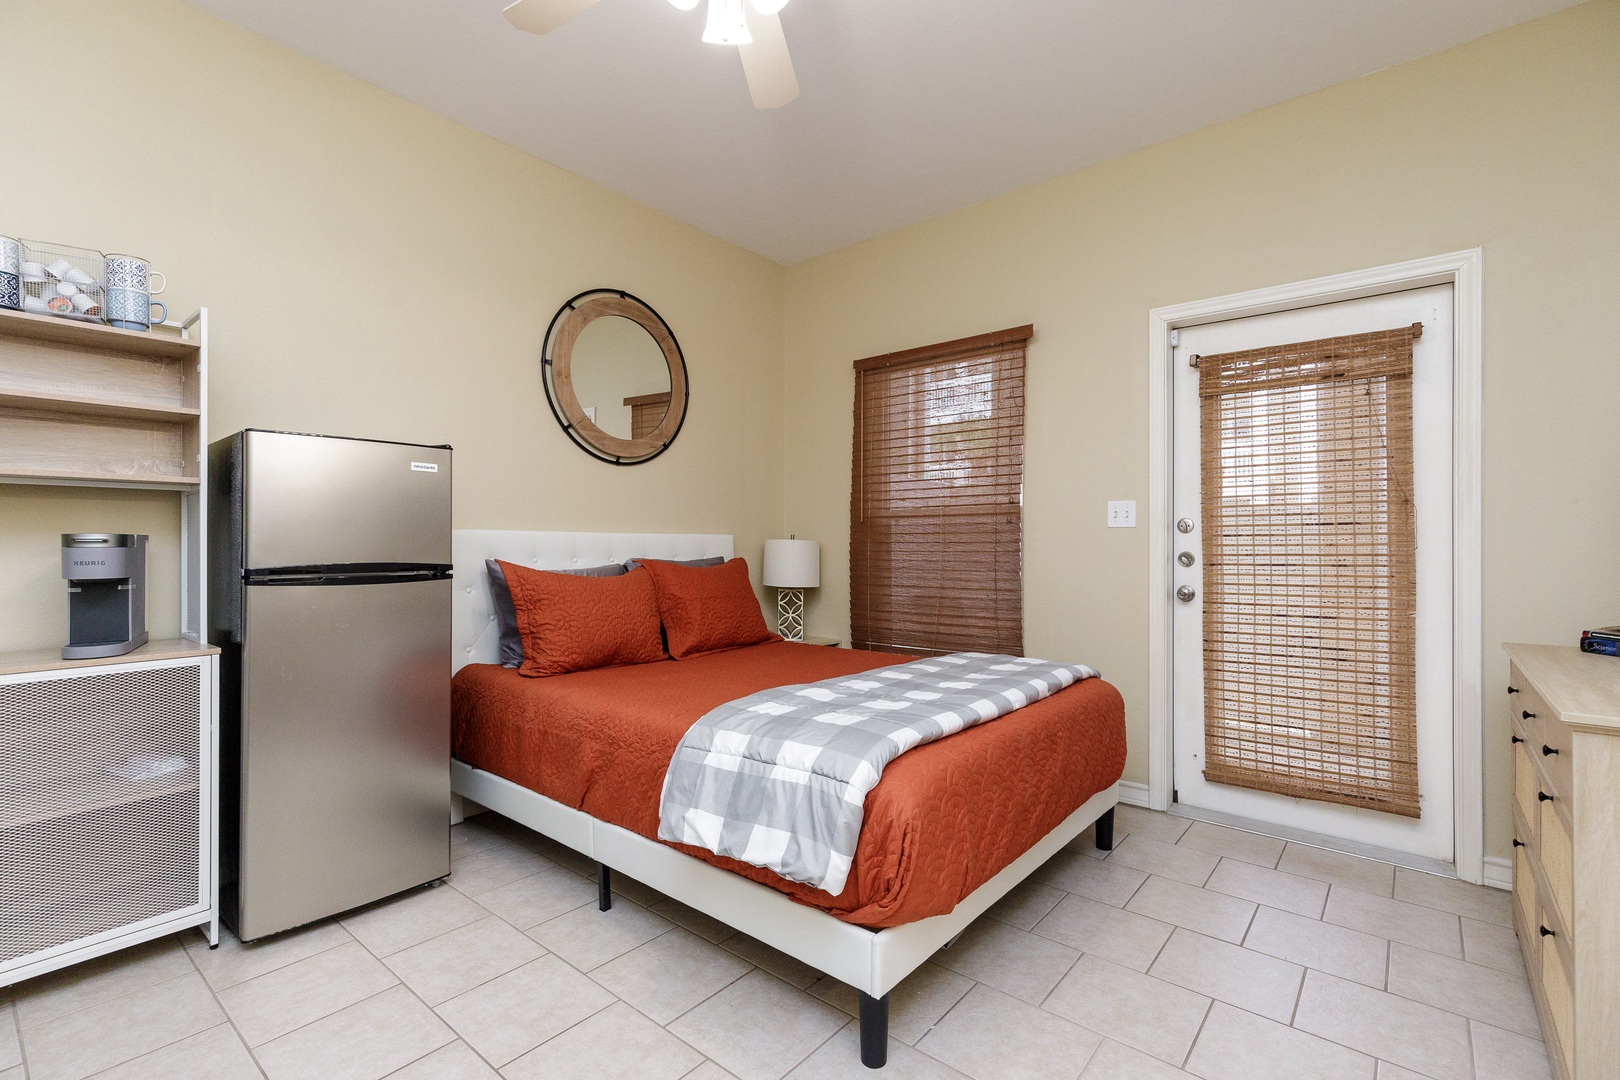 This 1st-floor queen suite boasts a private bath, Smart TV, kitchenette area, & deck access